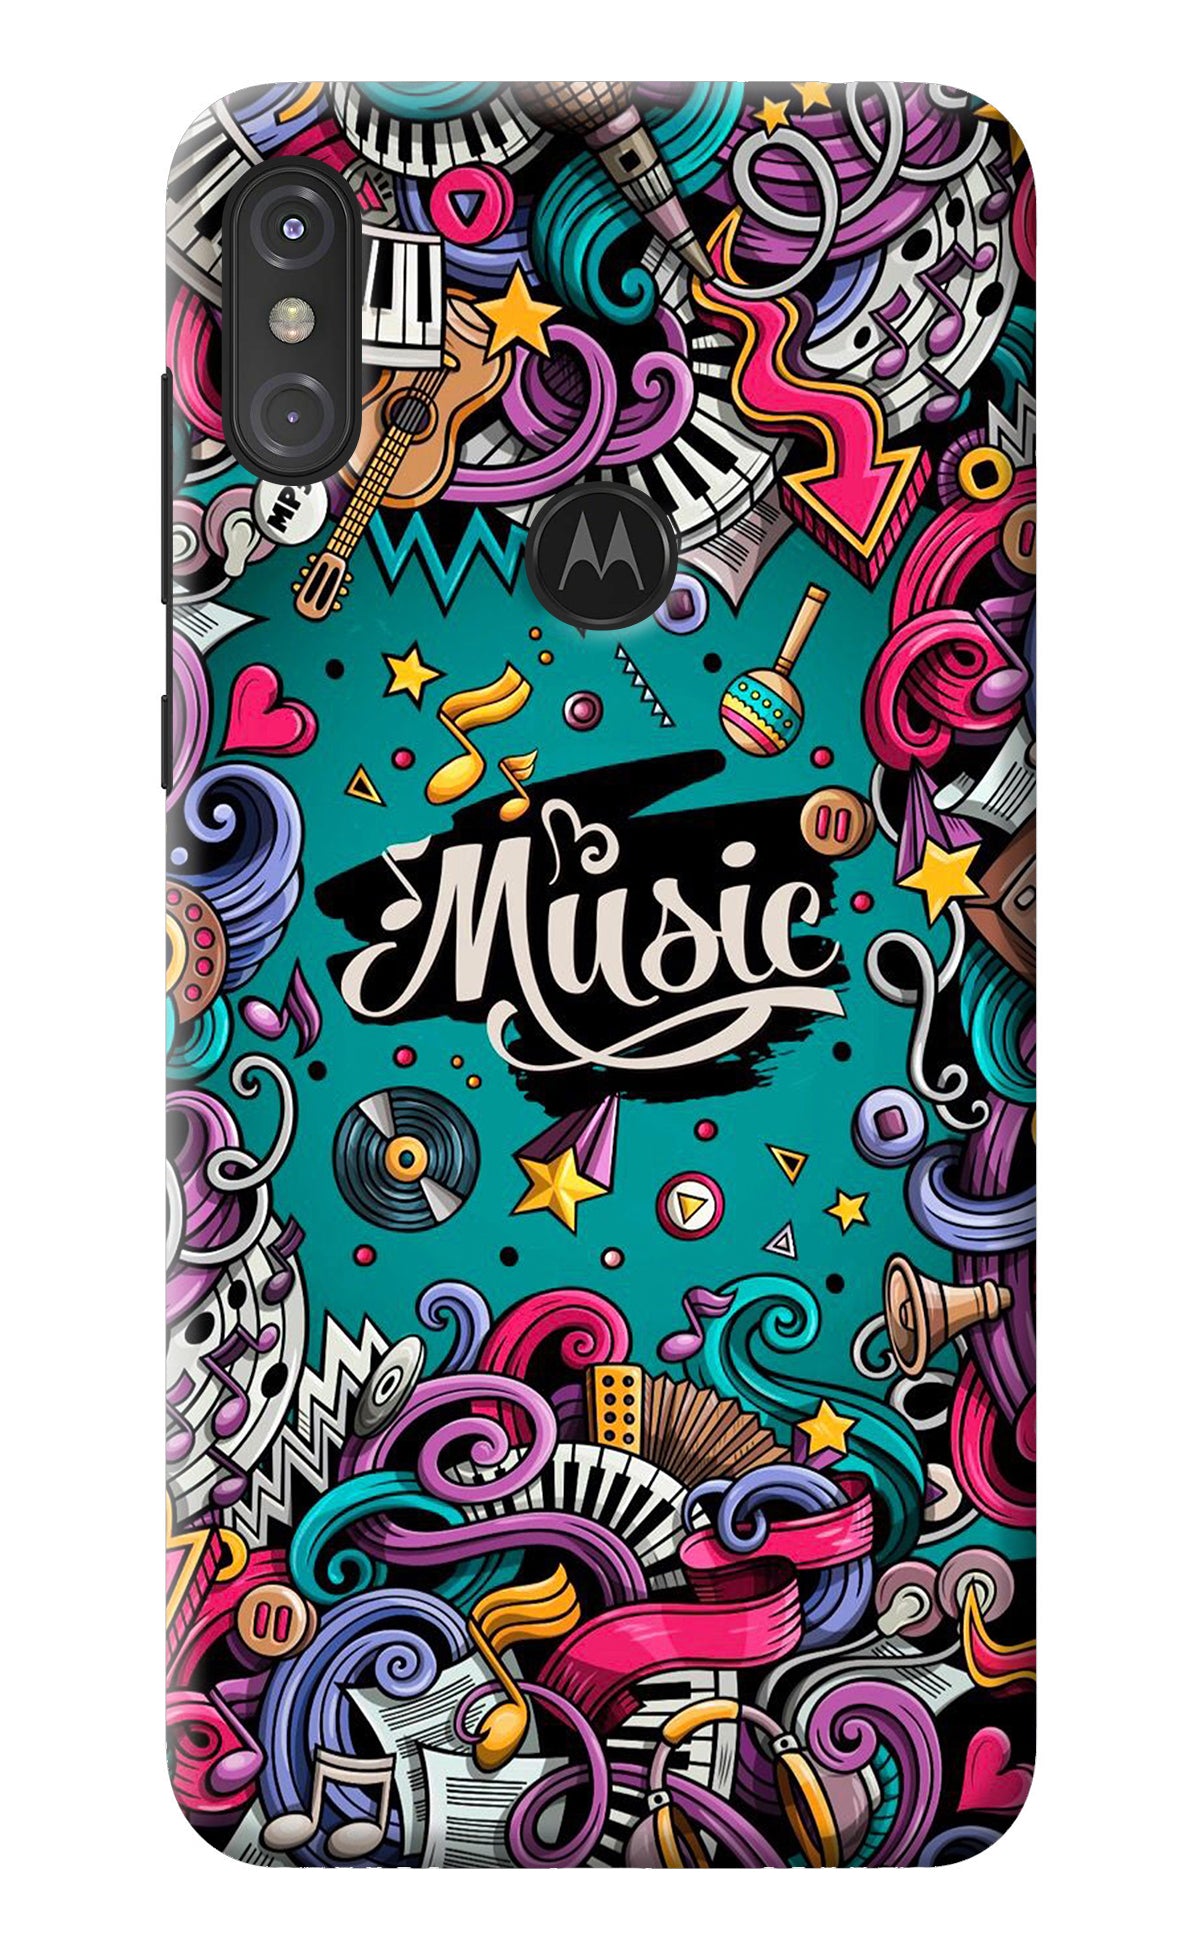 Music Graffiti Moto One Power Back Cover